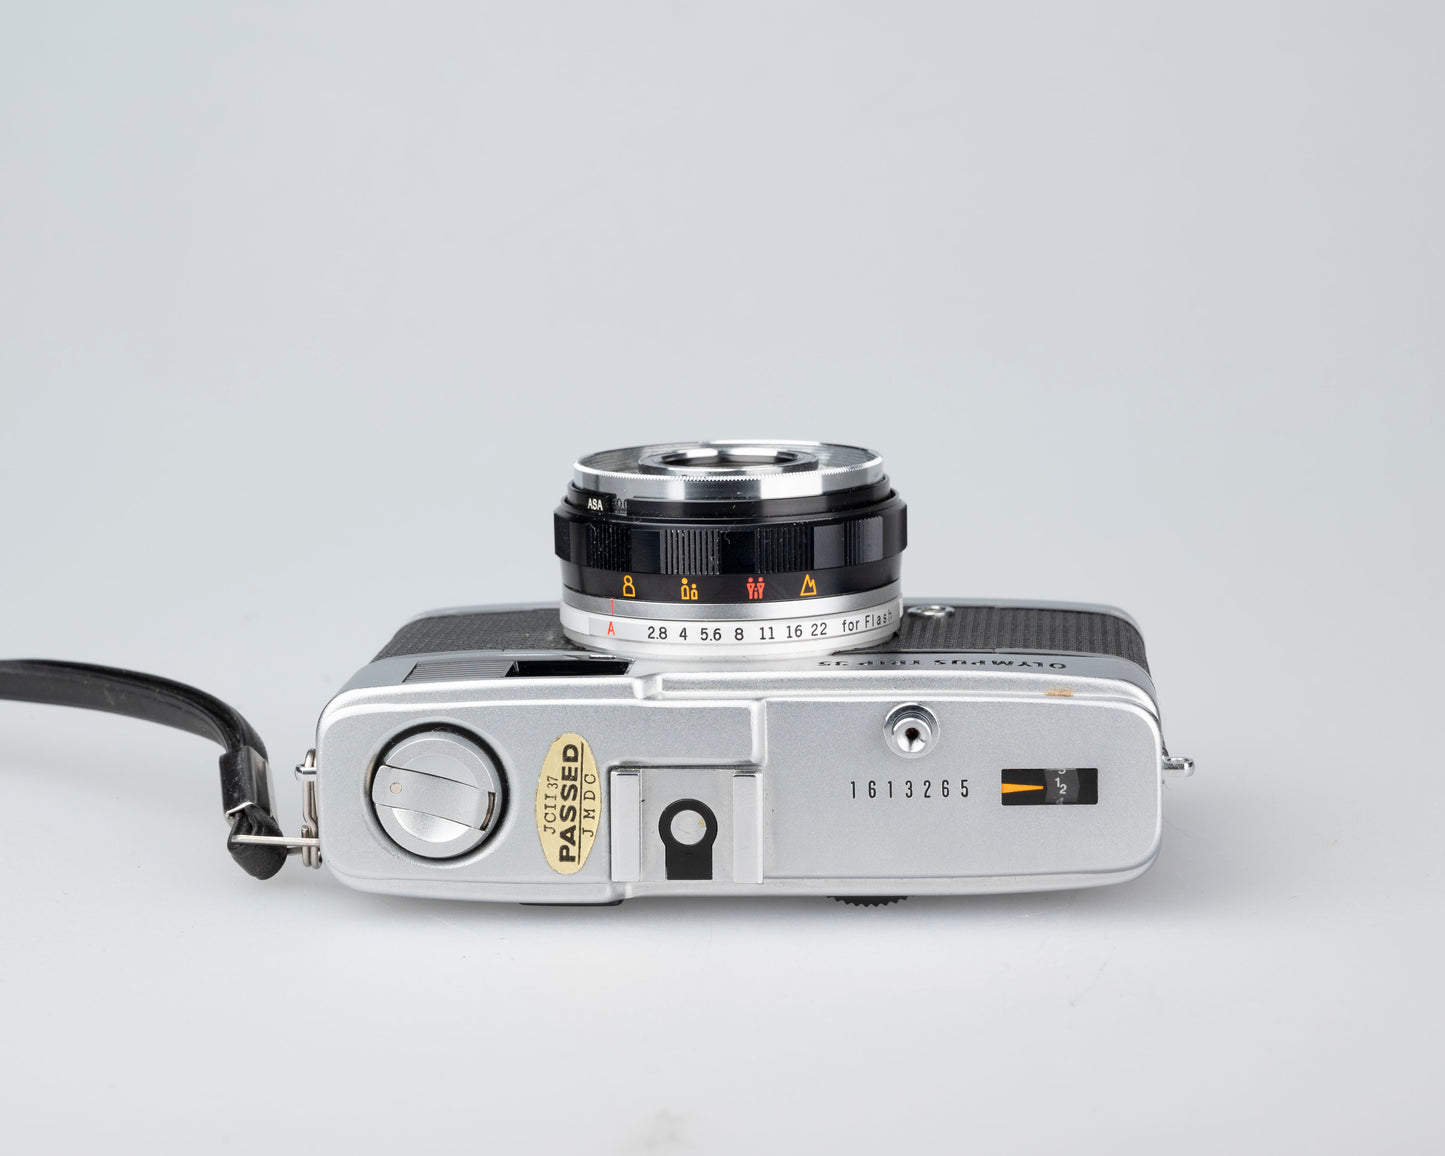 Olympus Trip 35 35mm camera (serial 1613265)